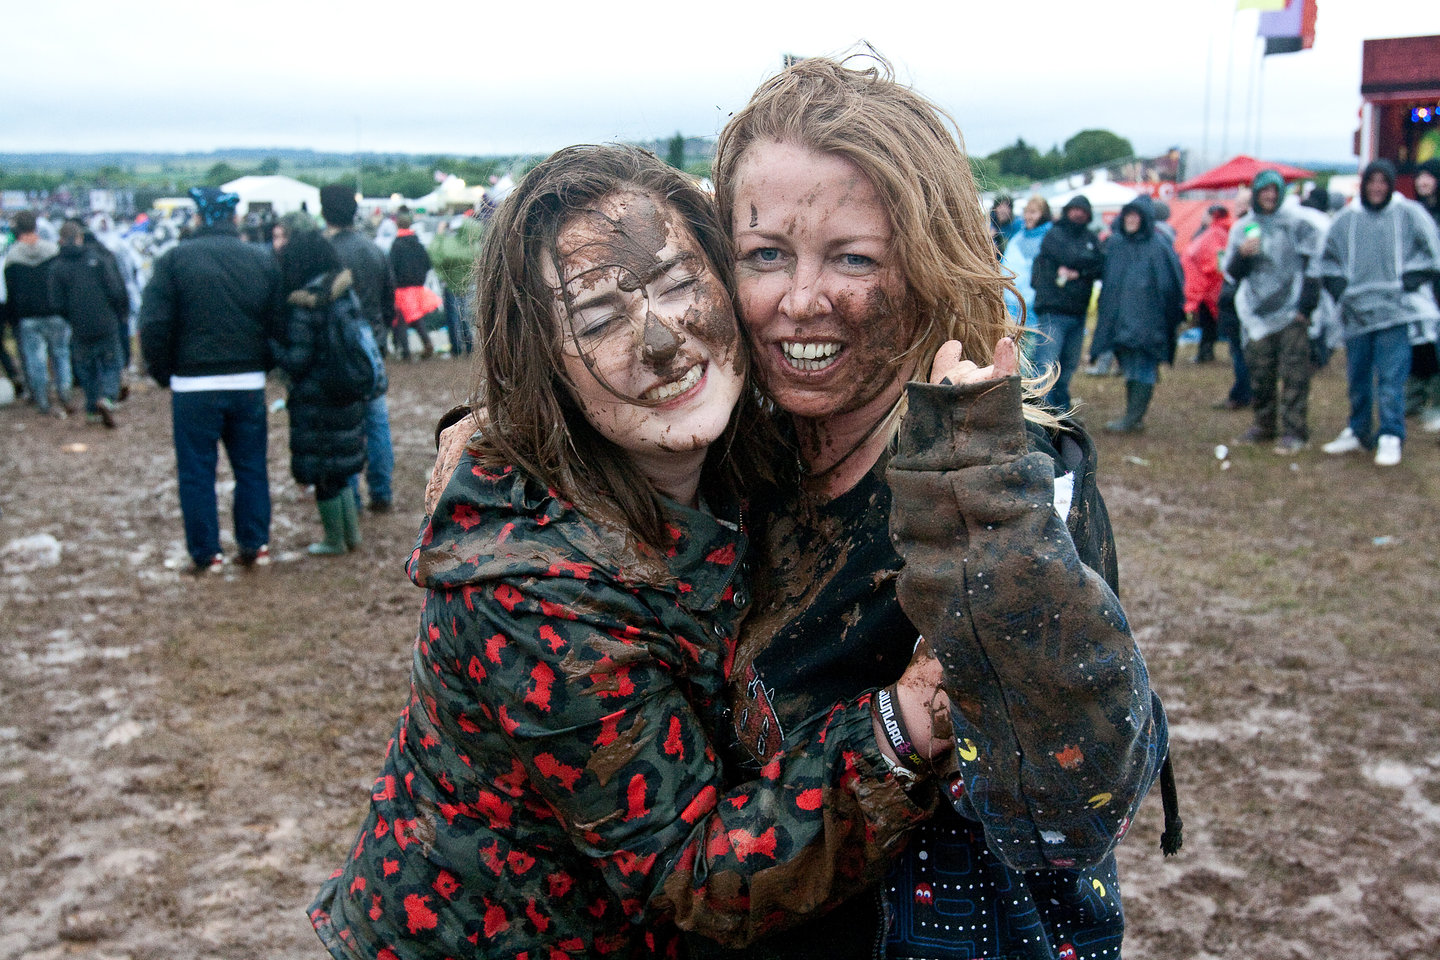 Mud Girls